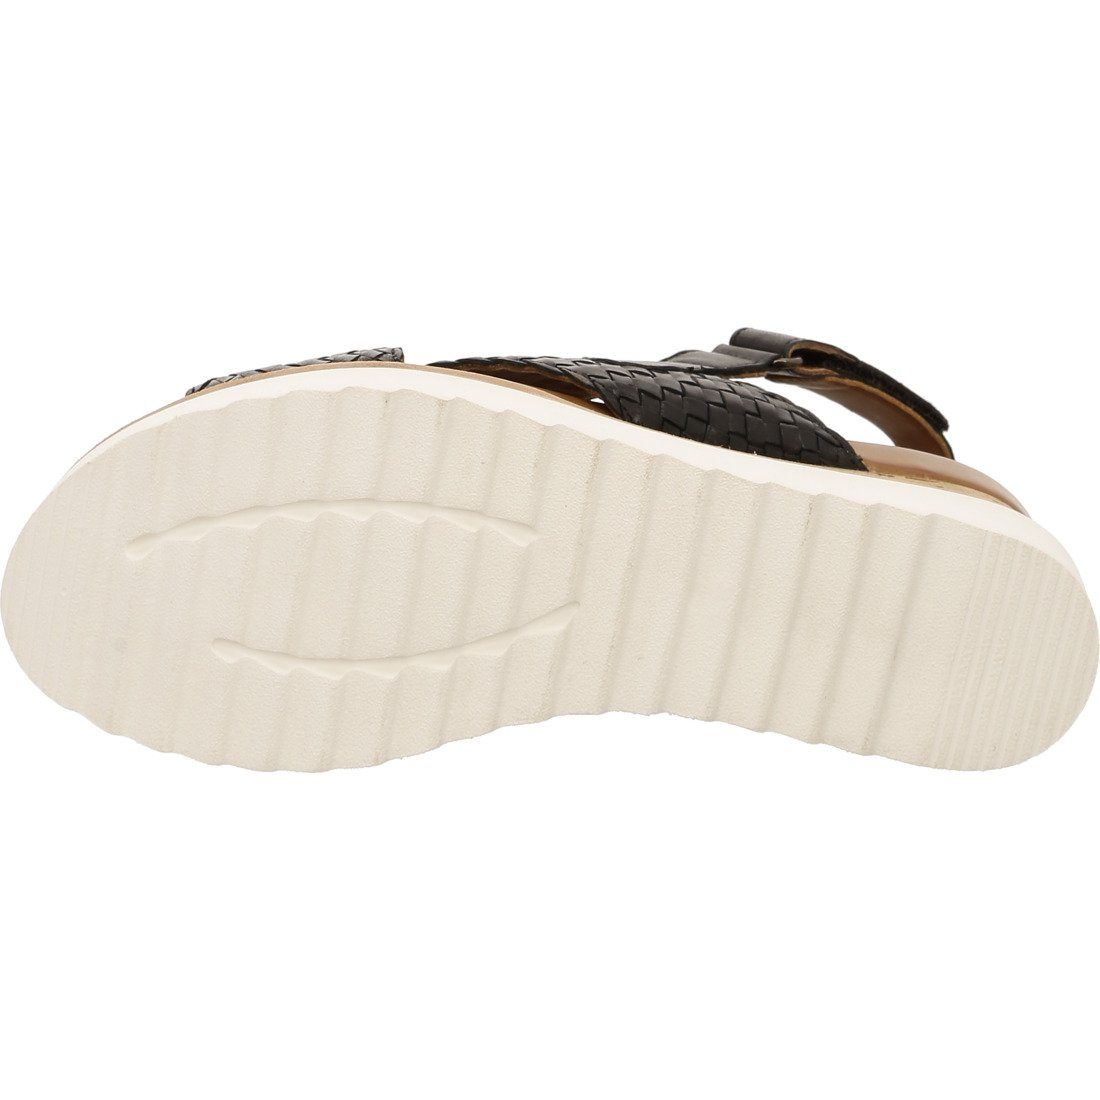 Ara Ara Sandalette Schuhe, Valencia Damen 045300 schwarz Leder - Sandalette